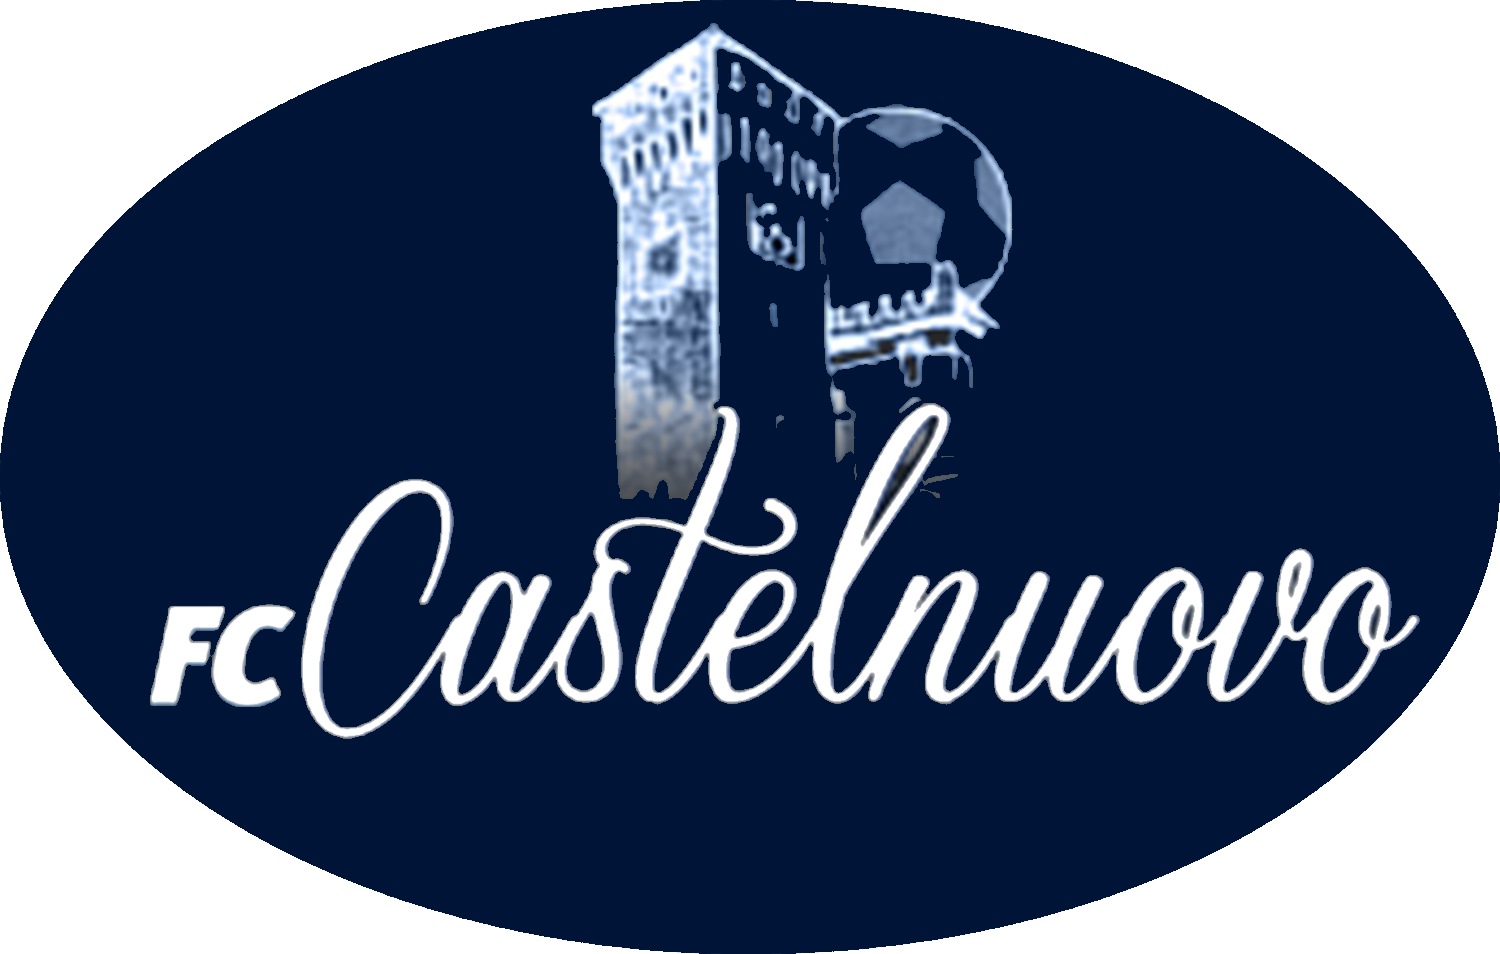 FC CASTELNUOVO v VIRTUS CAMPOGALLIANO